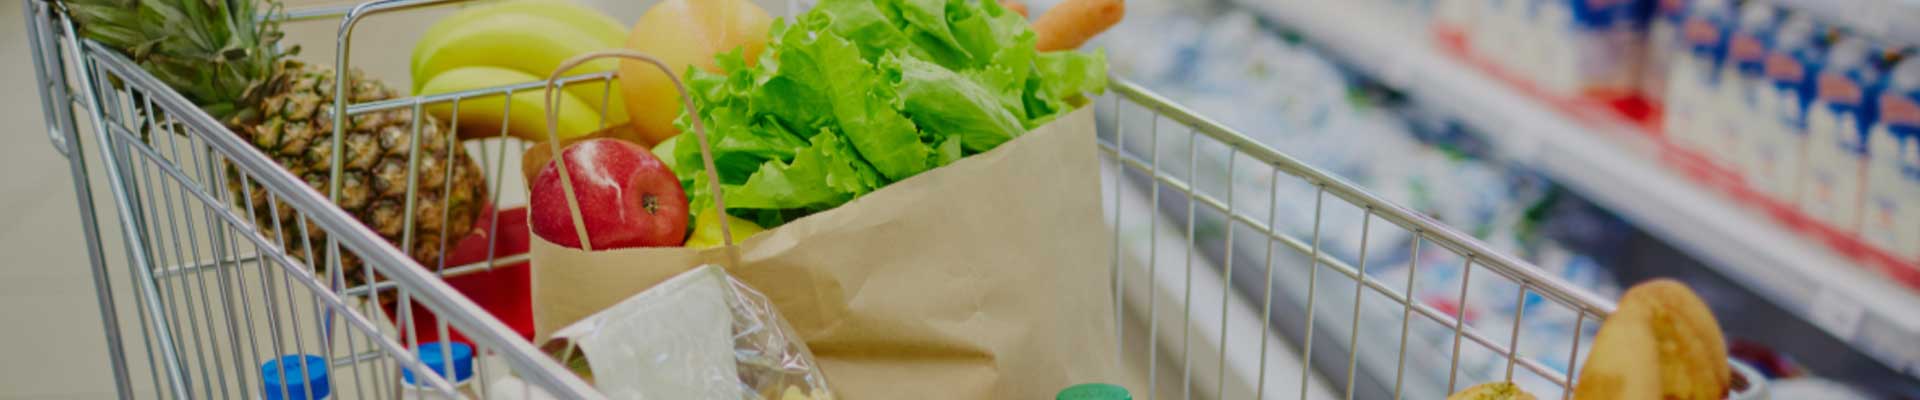 Biodegradable Food Packaging in Supermarket